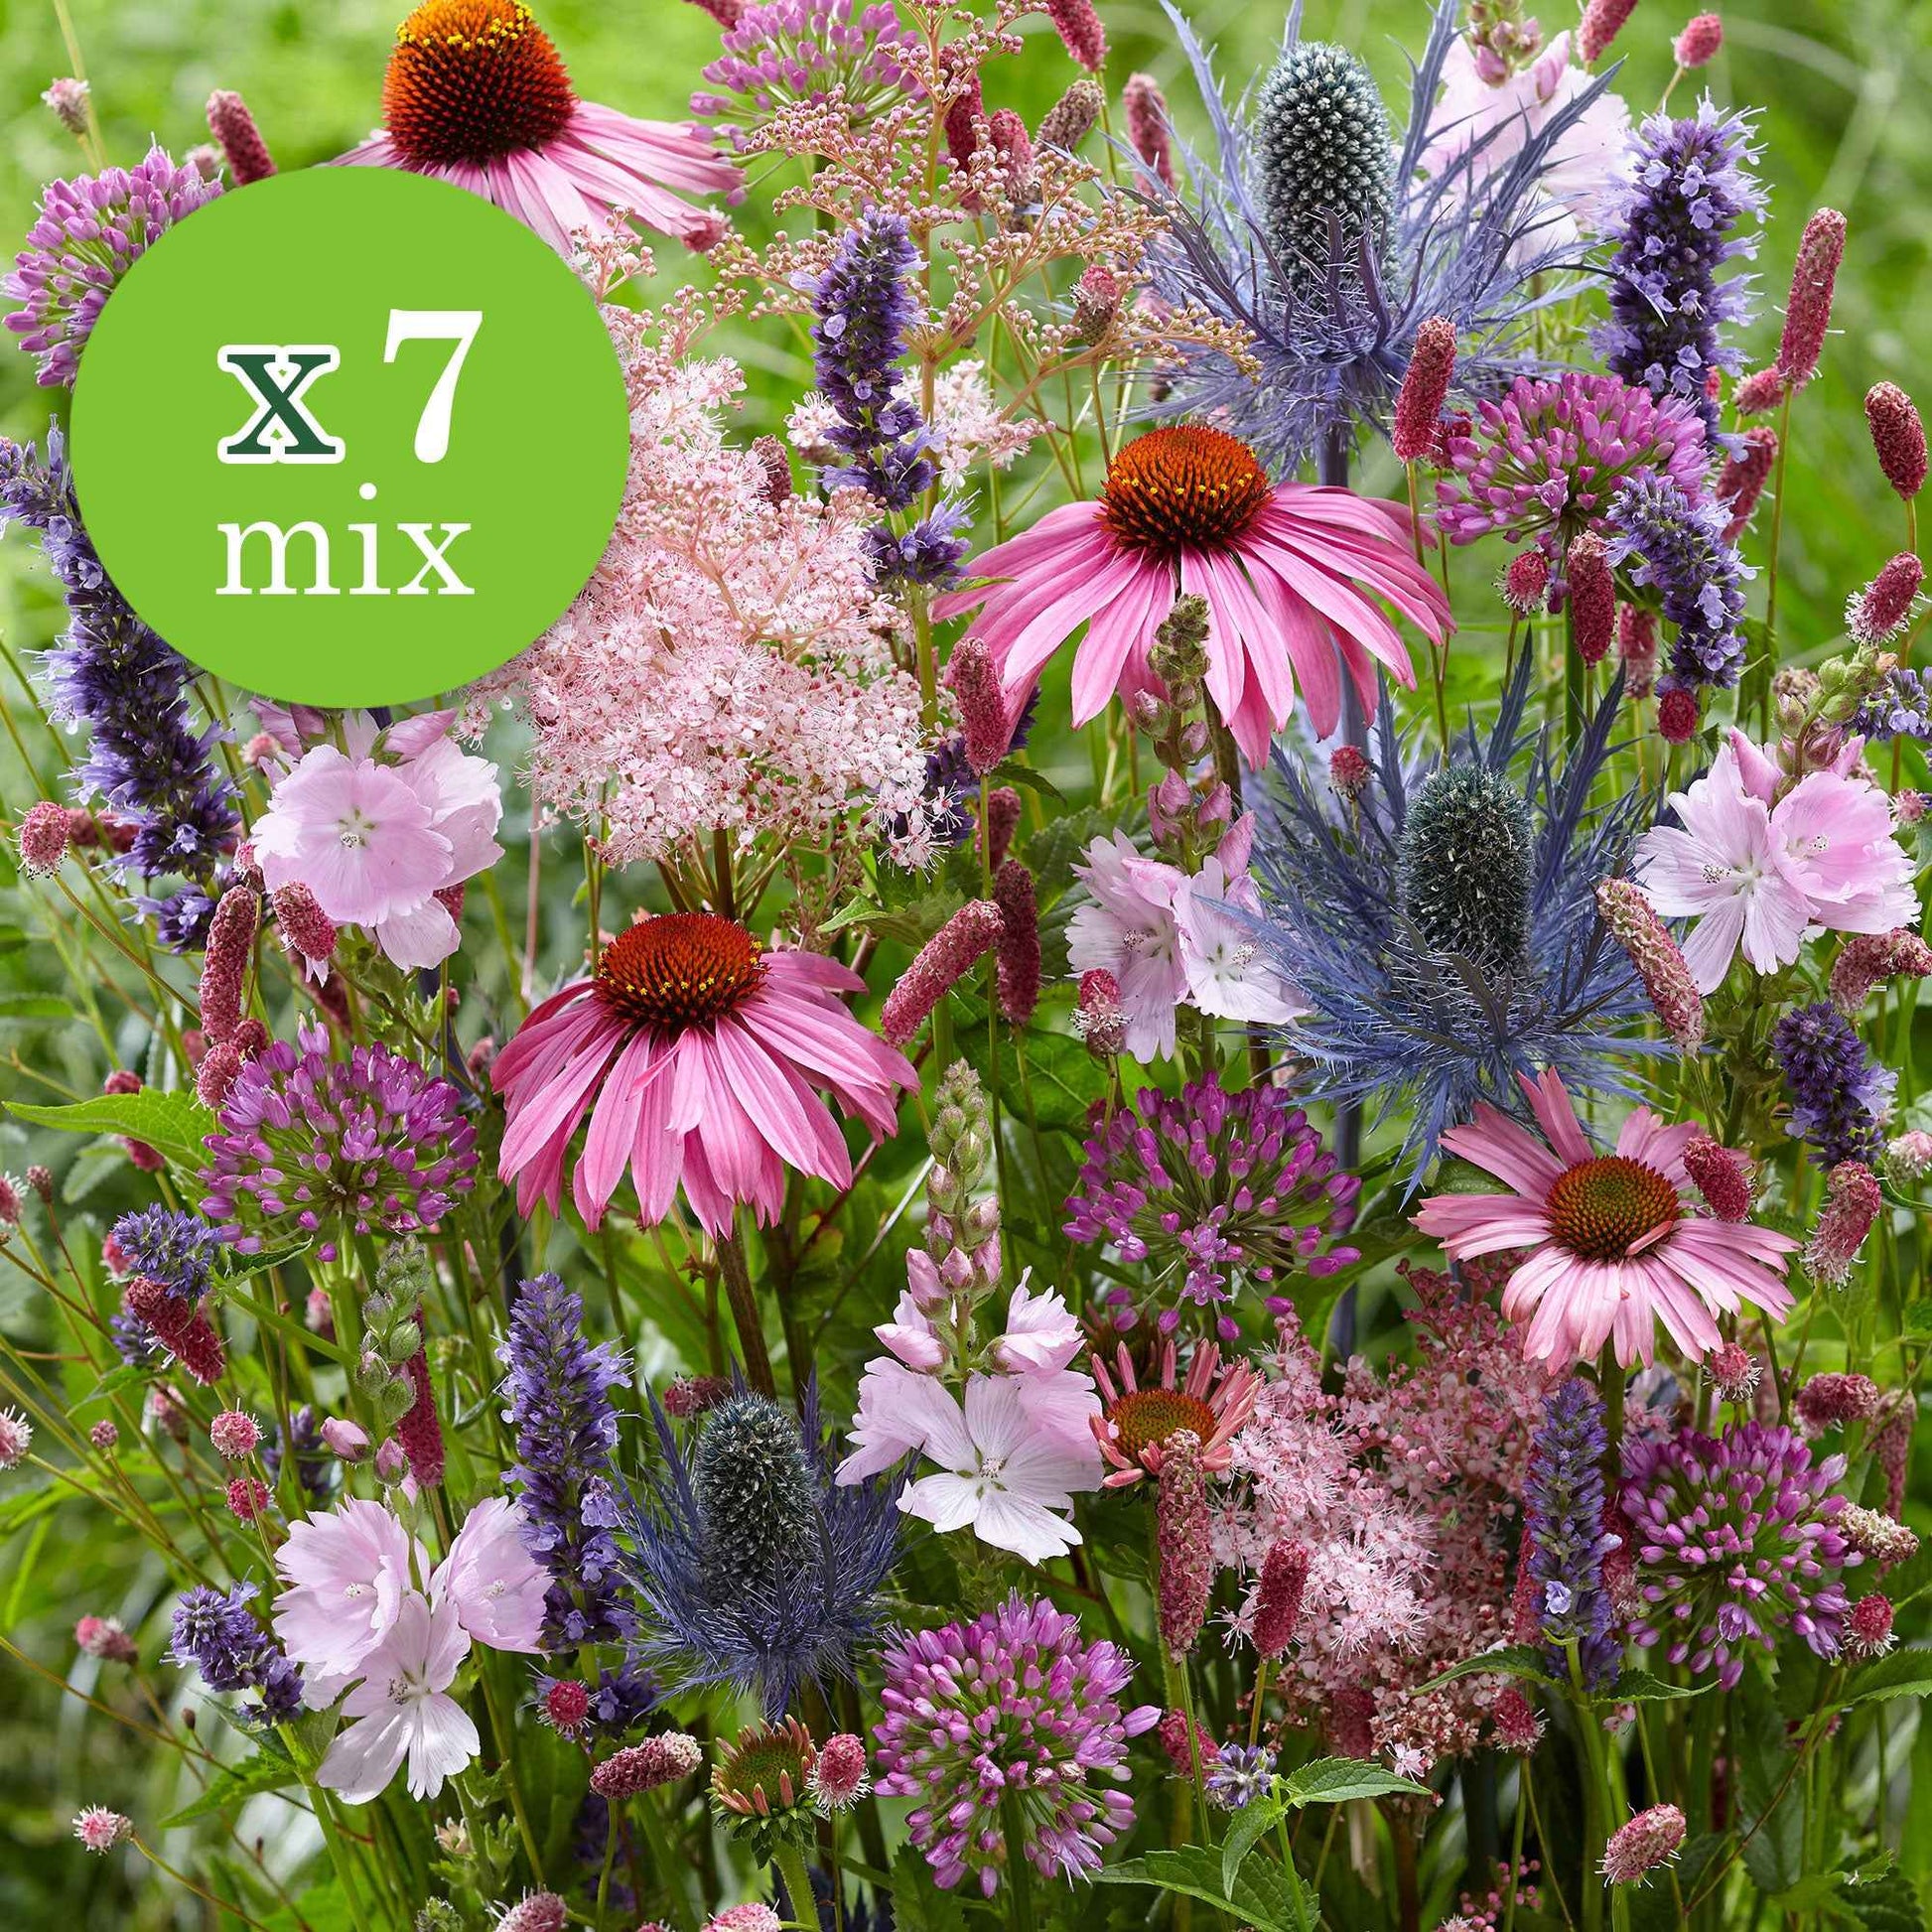 7x Vaste planten - Mix 'Colourful Butterflies' roze-paars-blauw - Bare rooted - Winterhard - Alle vaste tuinplanten